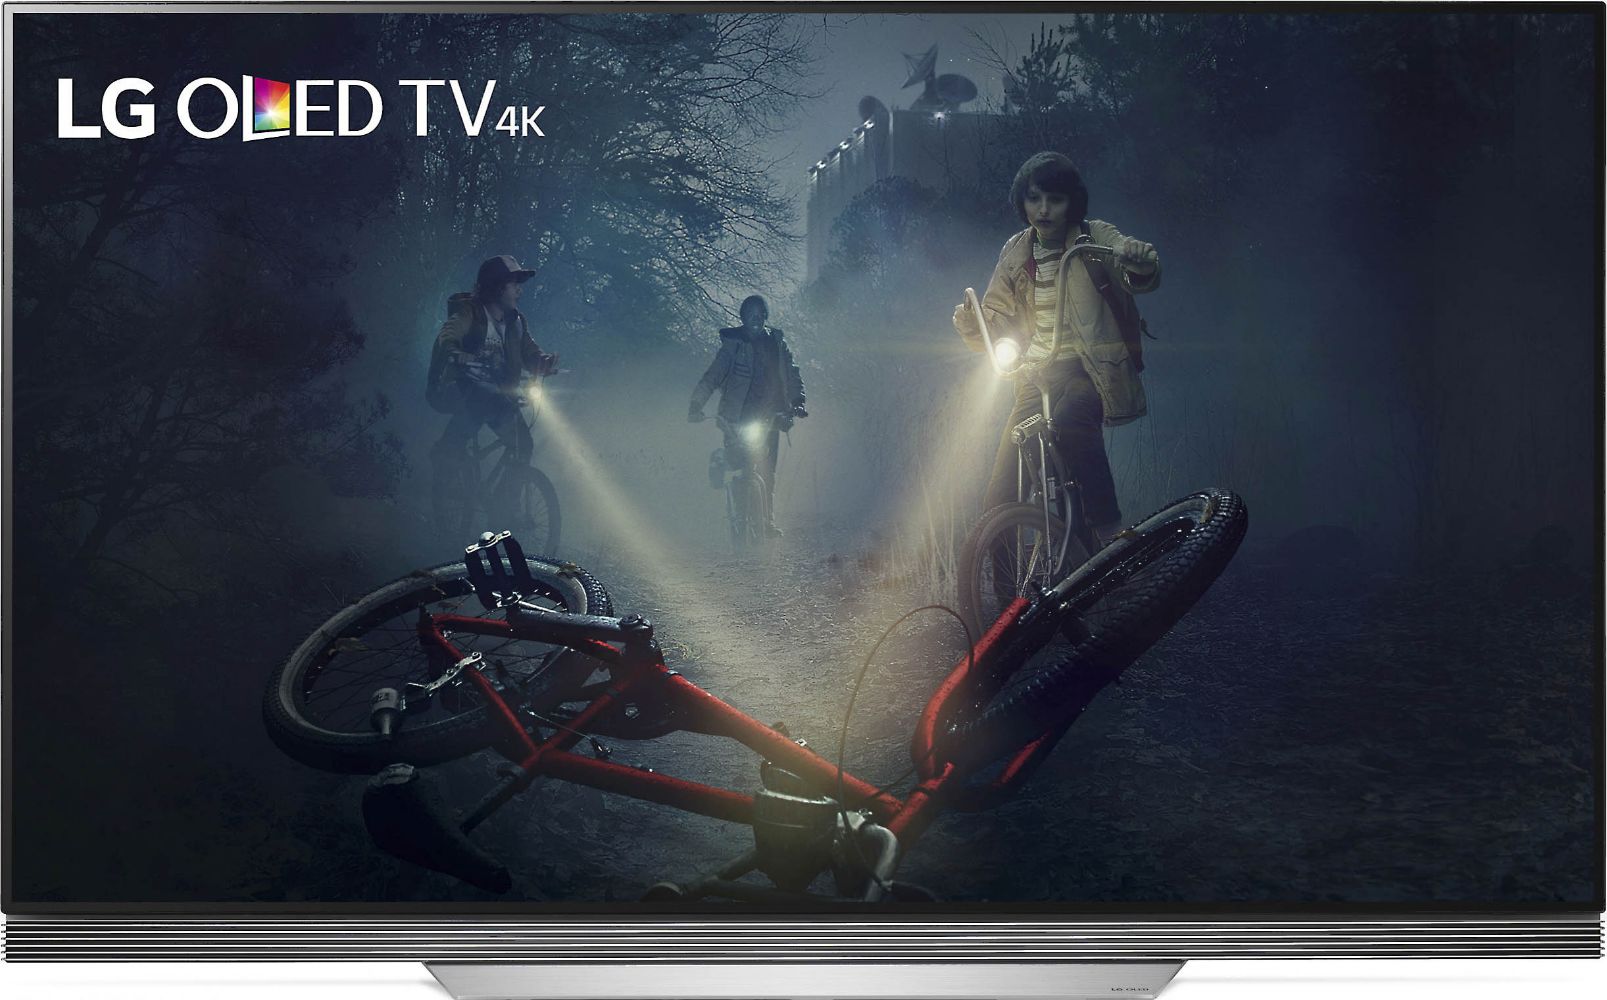 LG TVs - Including 4K UHD Smart TVs In A Range Of Sizes